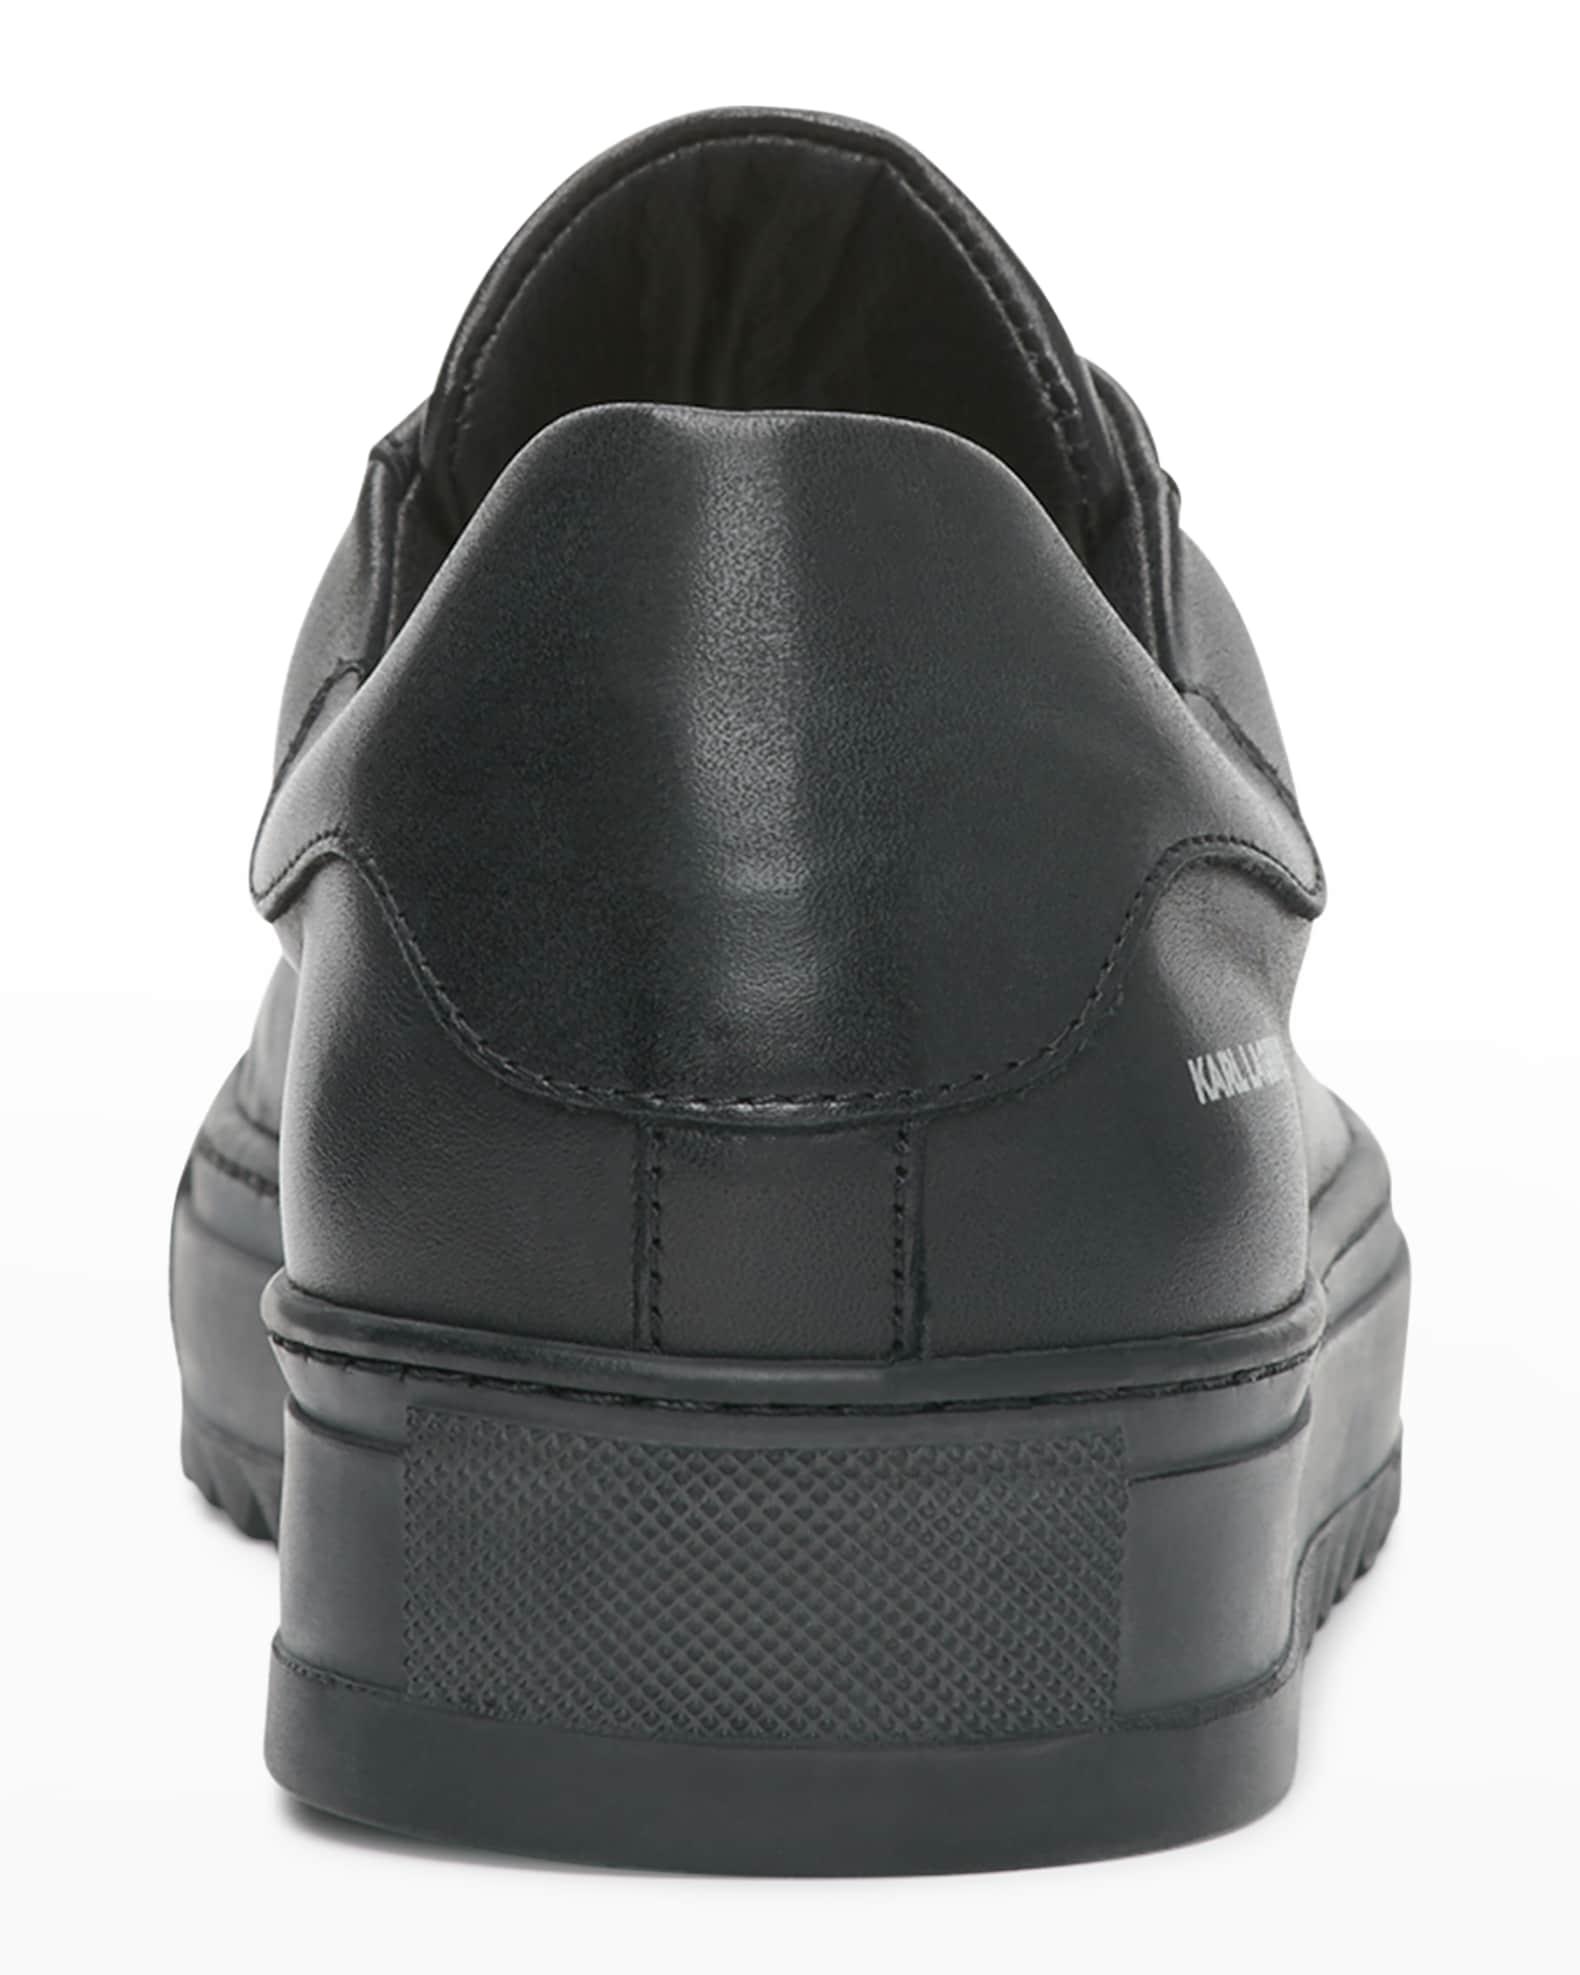 Karl Lagerfeld Paris Men's Classic Leather Low-Top Sneakers | Neiman Marcus